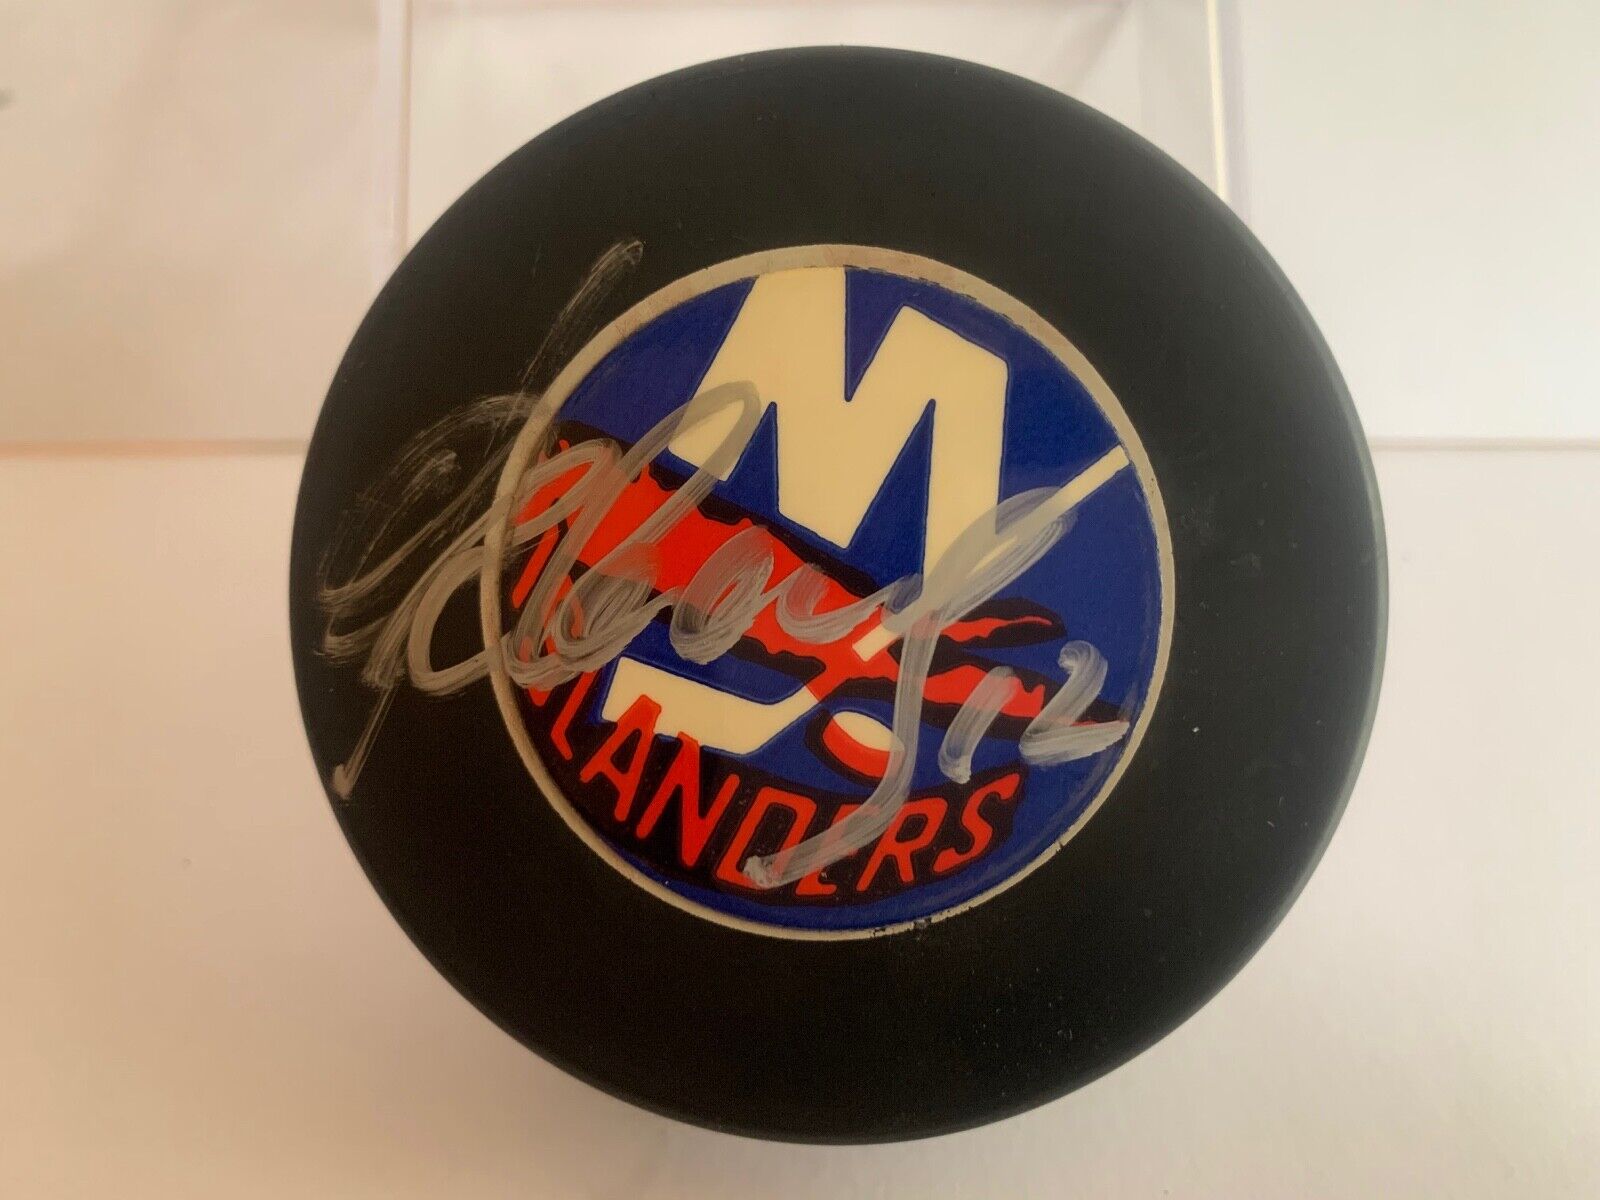 Oleg Kvasha Autographed Official NHL Hockey Puck New York Islanders Logo